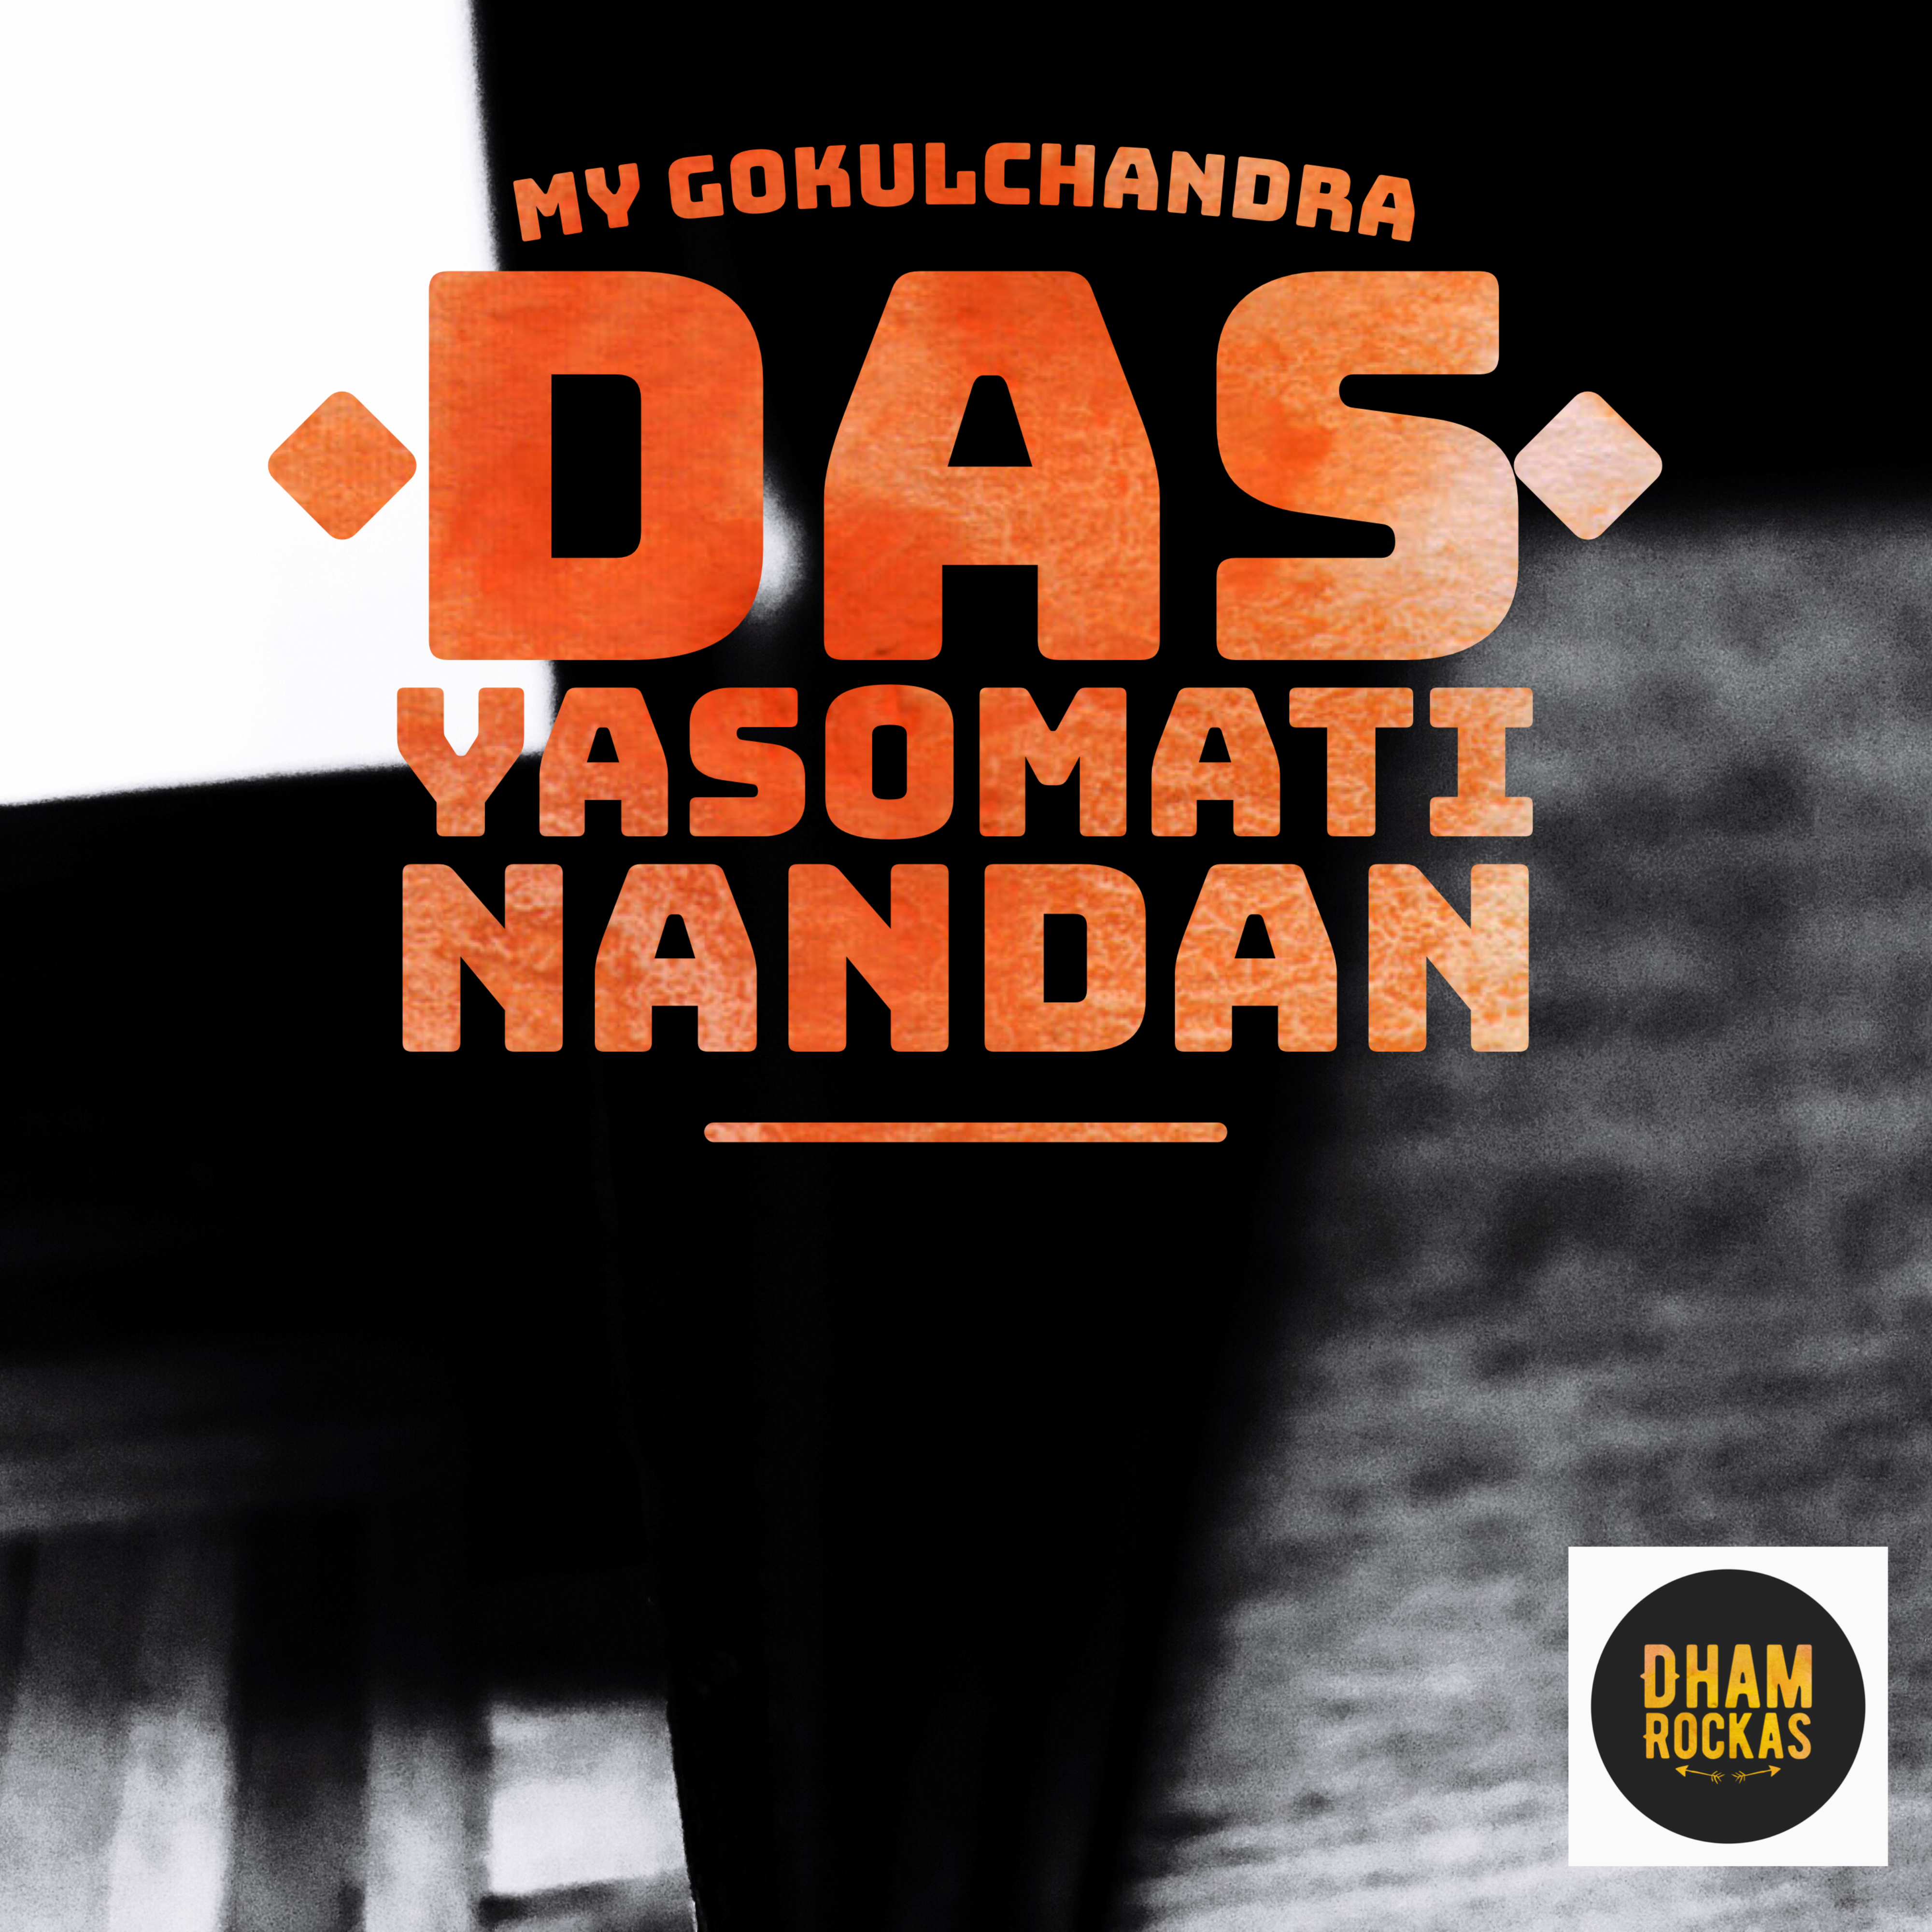 Yasomati Nandana